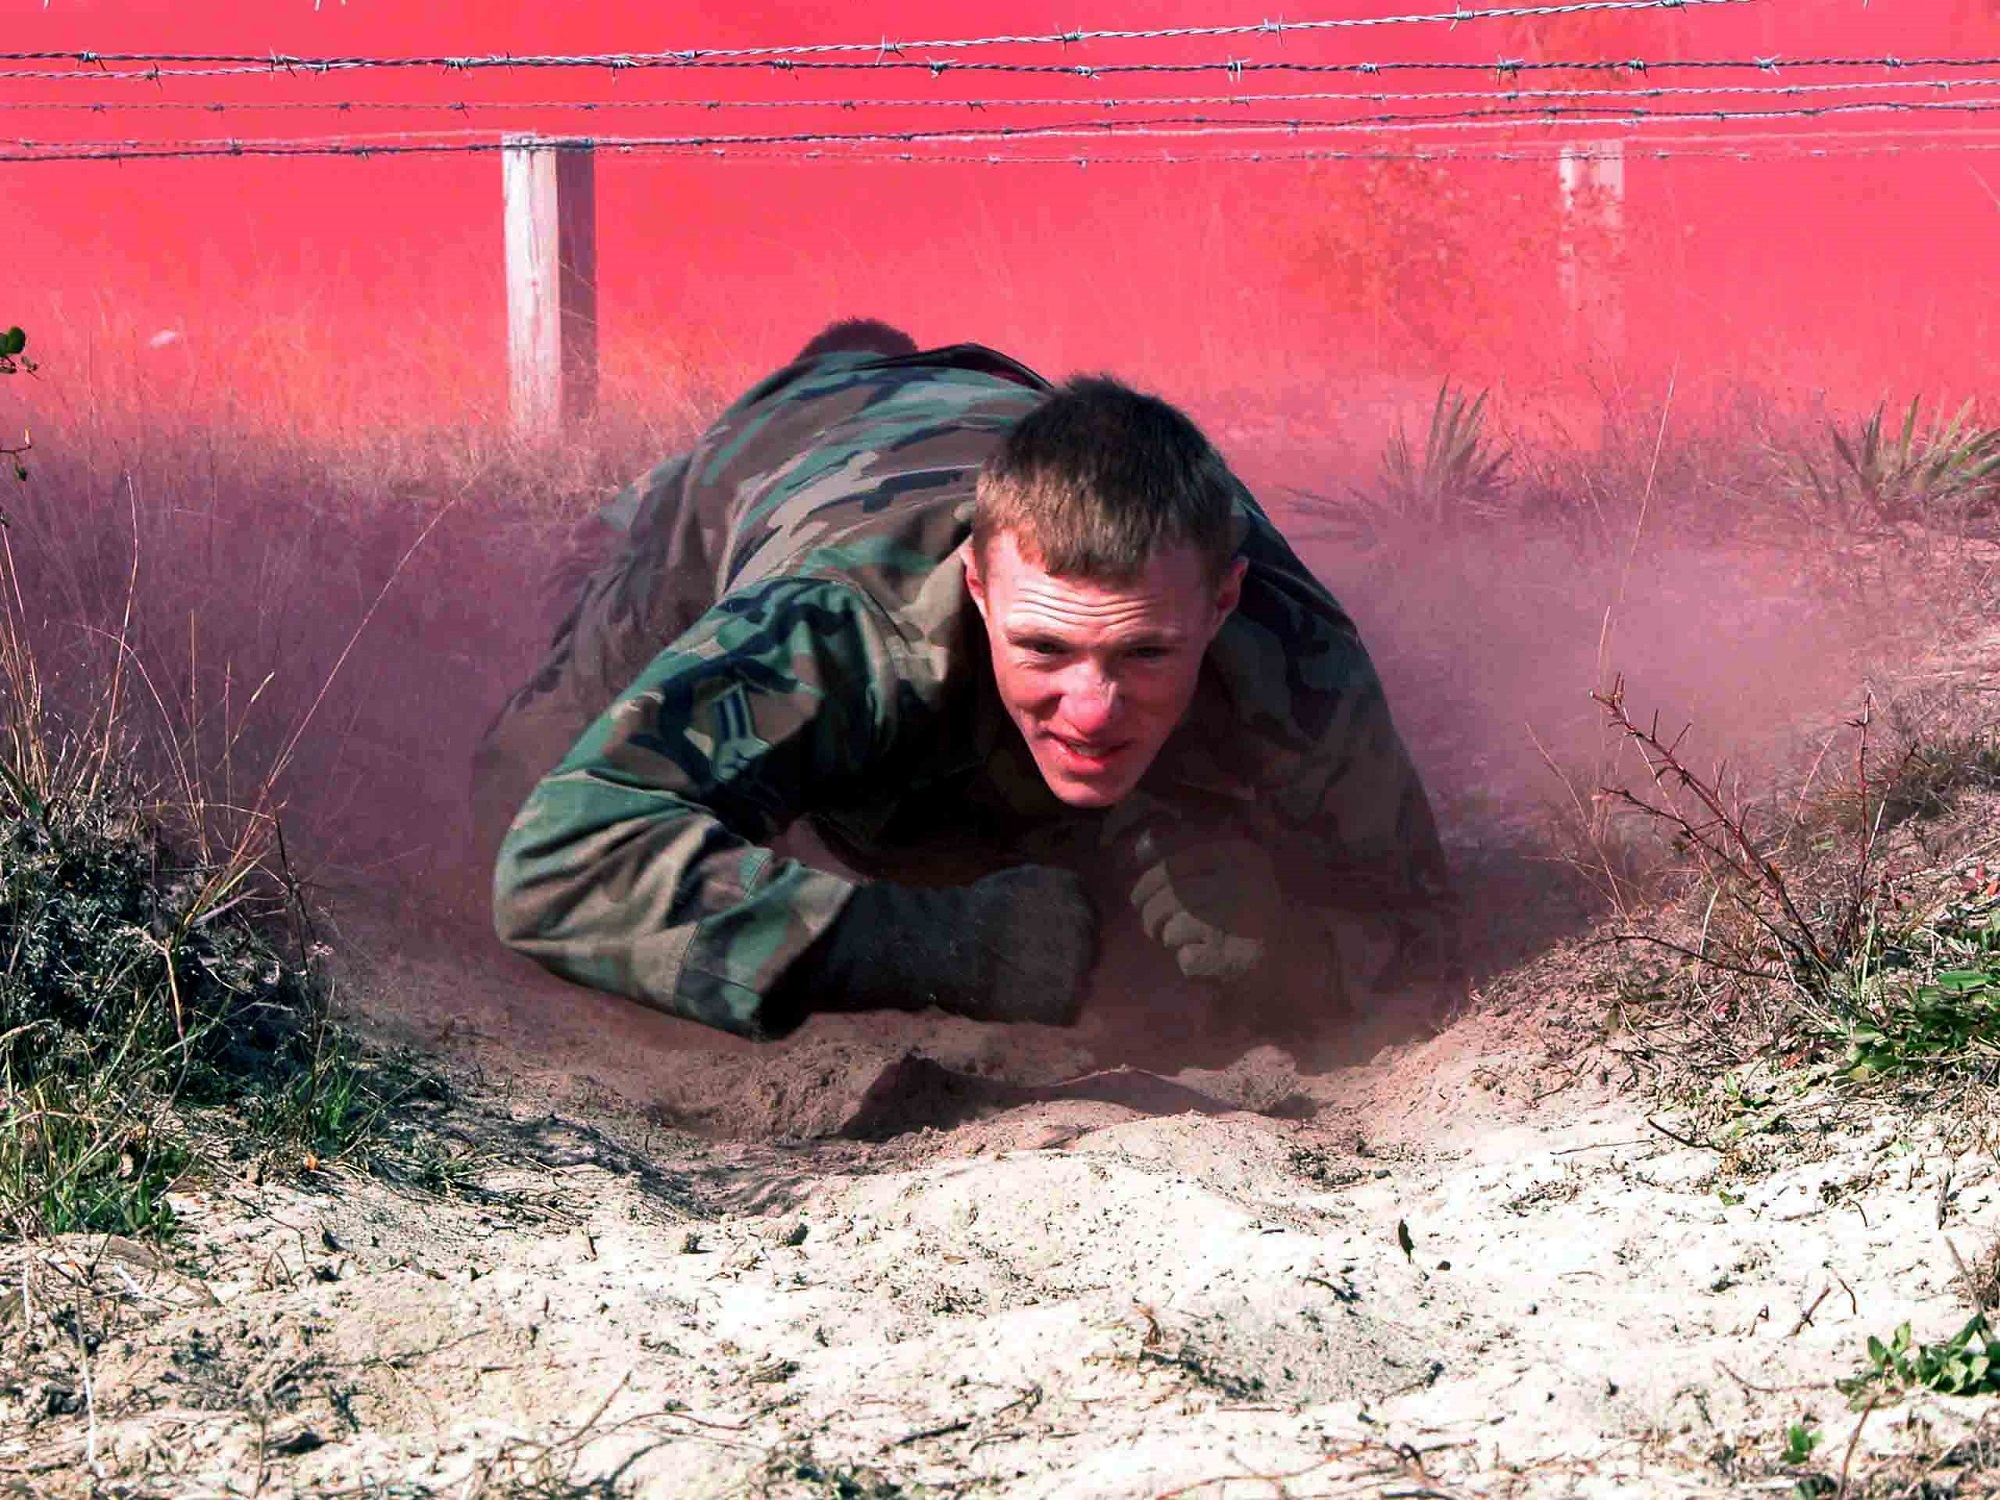 Military exercise photo